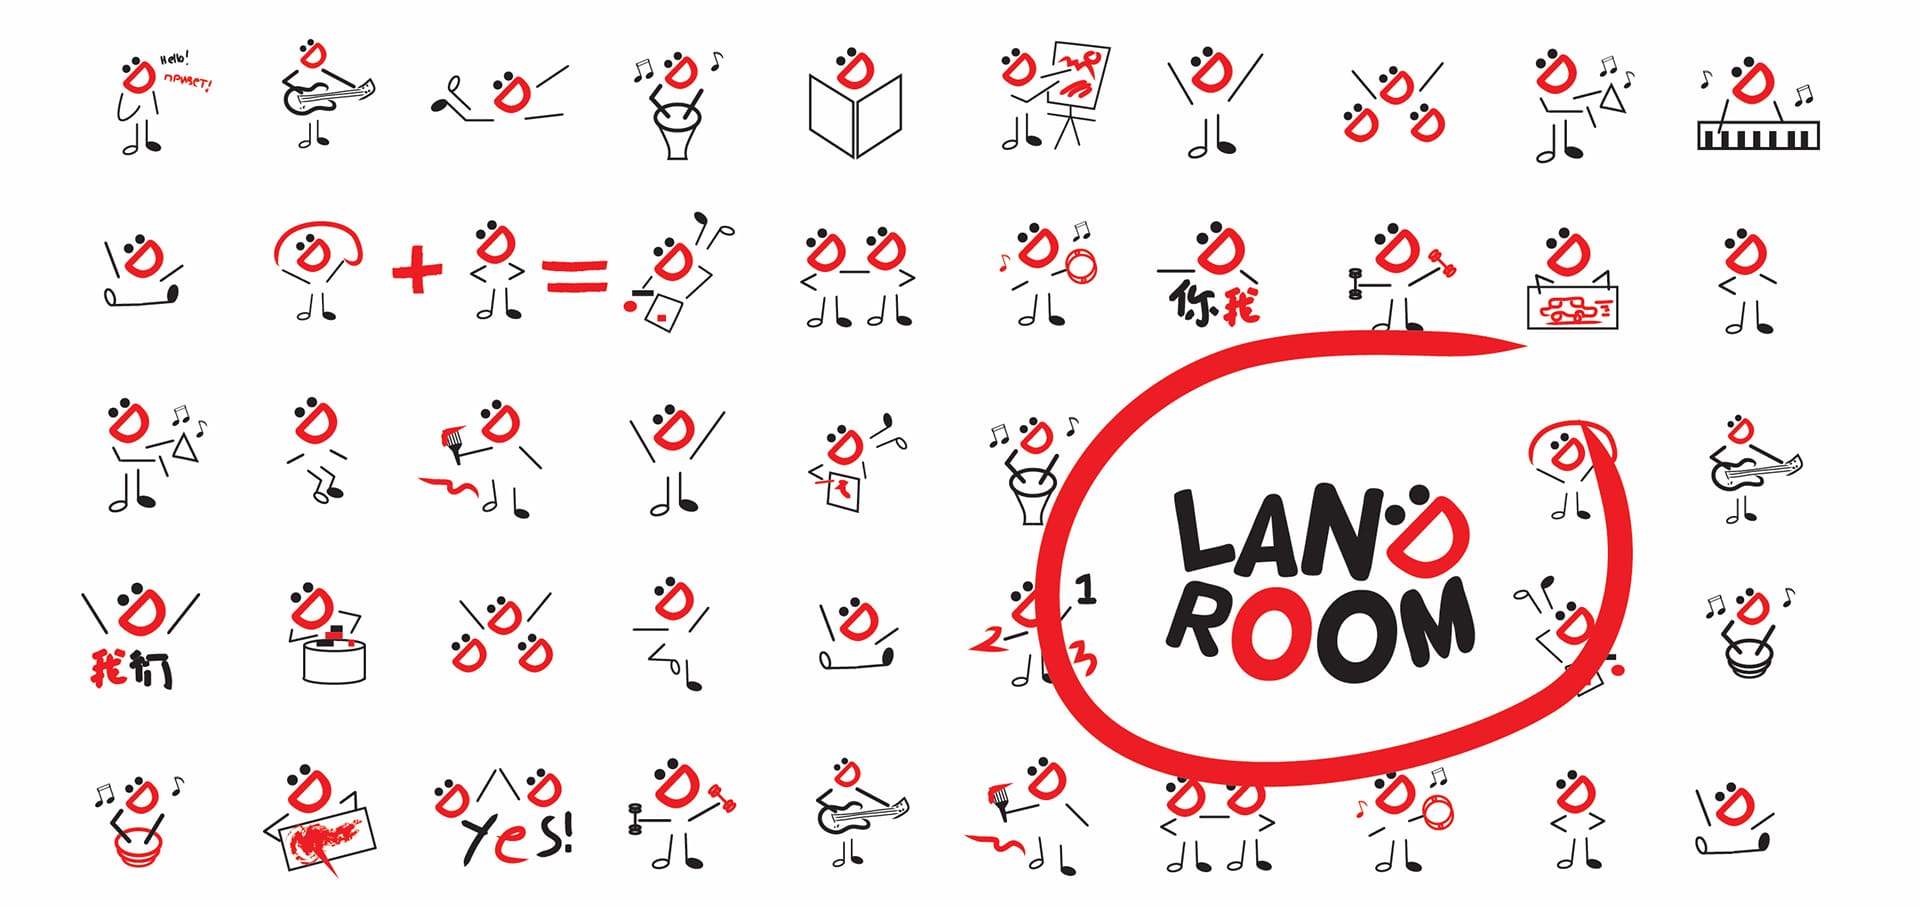 LandRoom icons